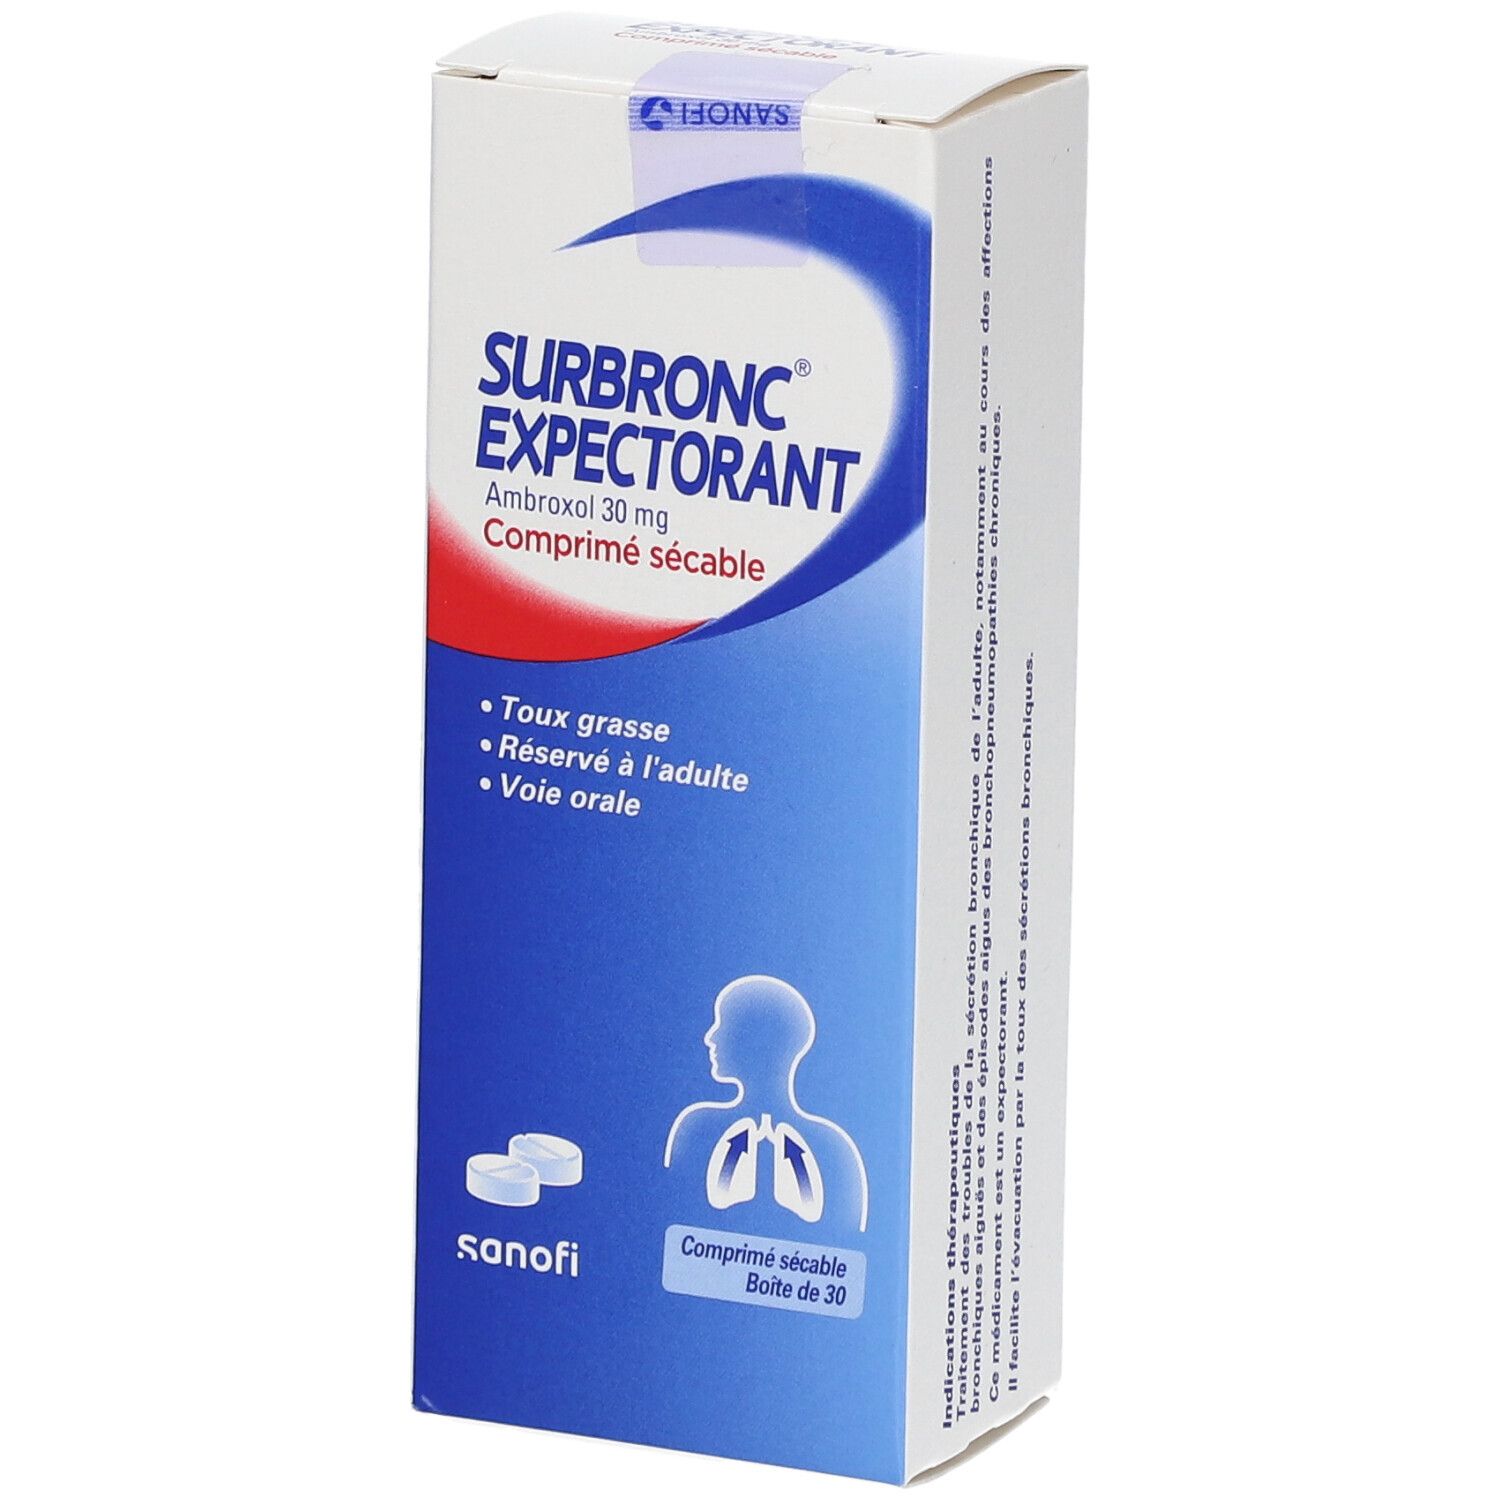 Surbronc® Expectorant Ambroxol 30 mg